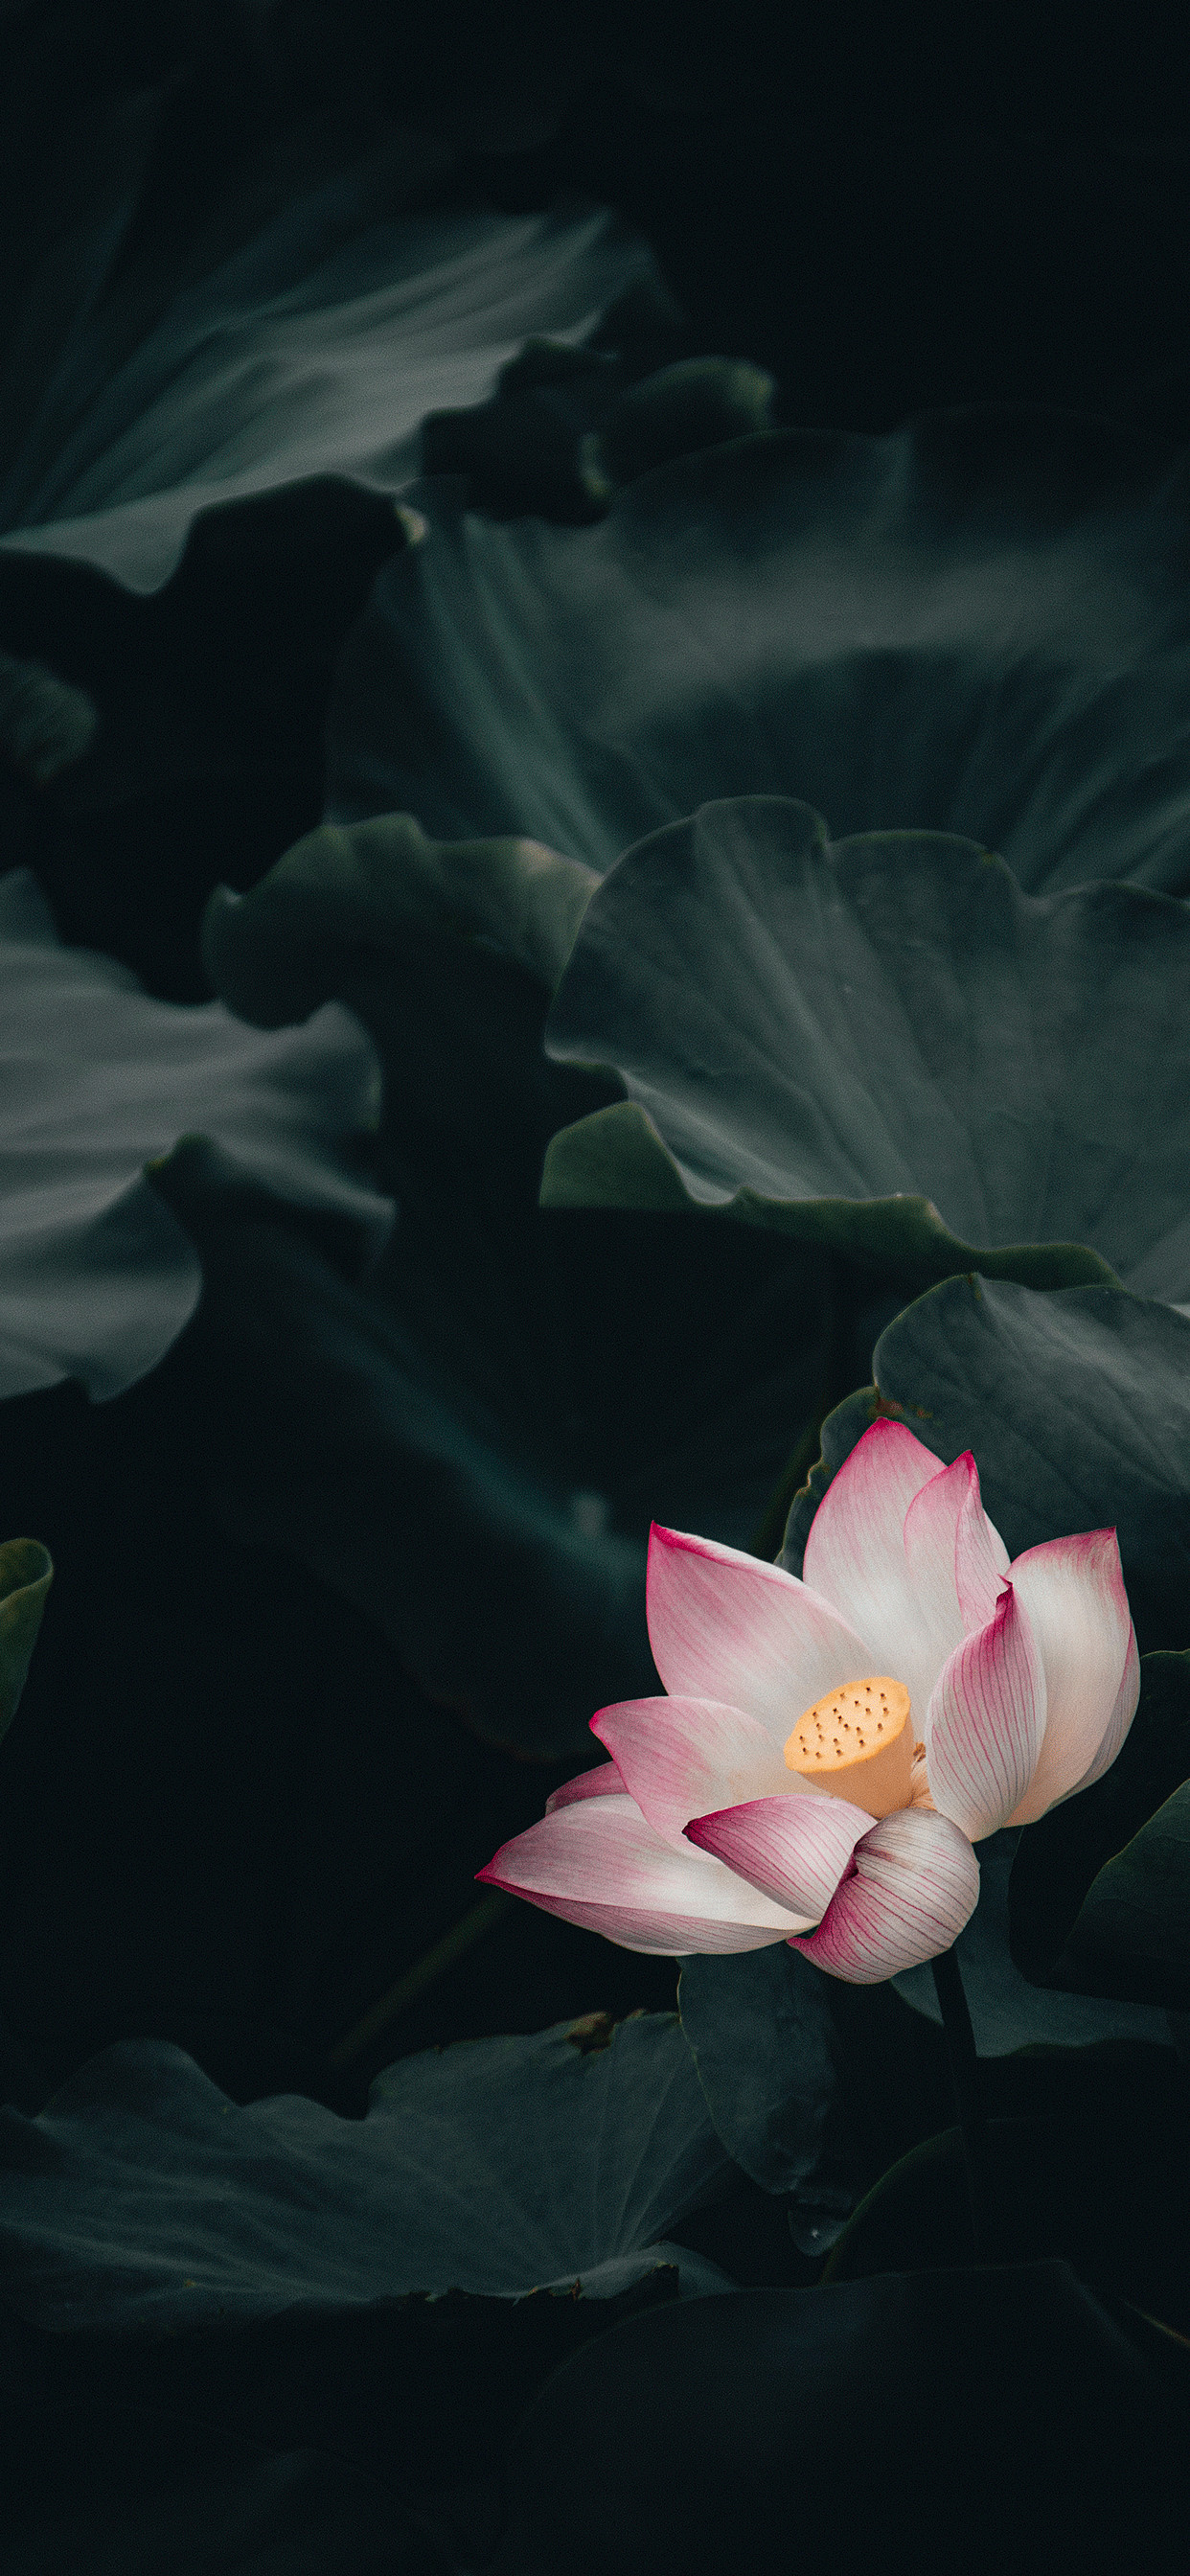 1242x2688 iPhone wallpaper lotus flower Lotus flower